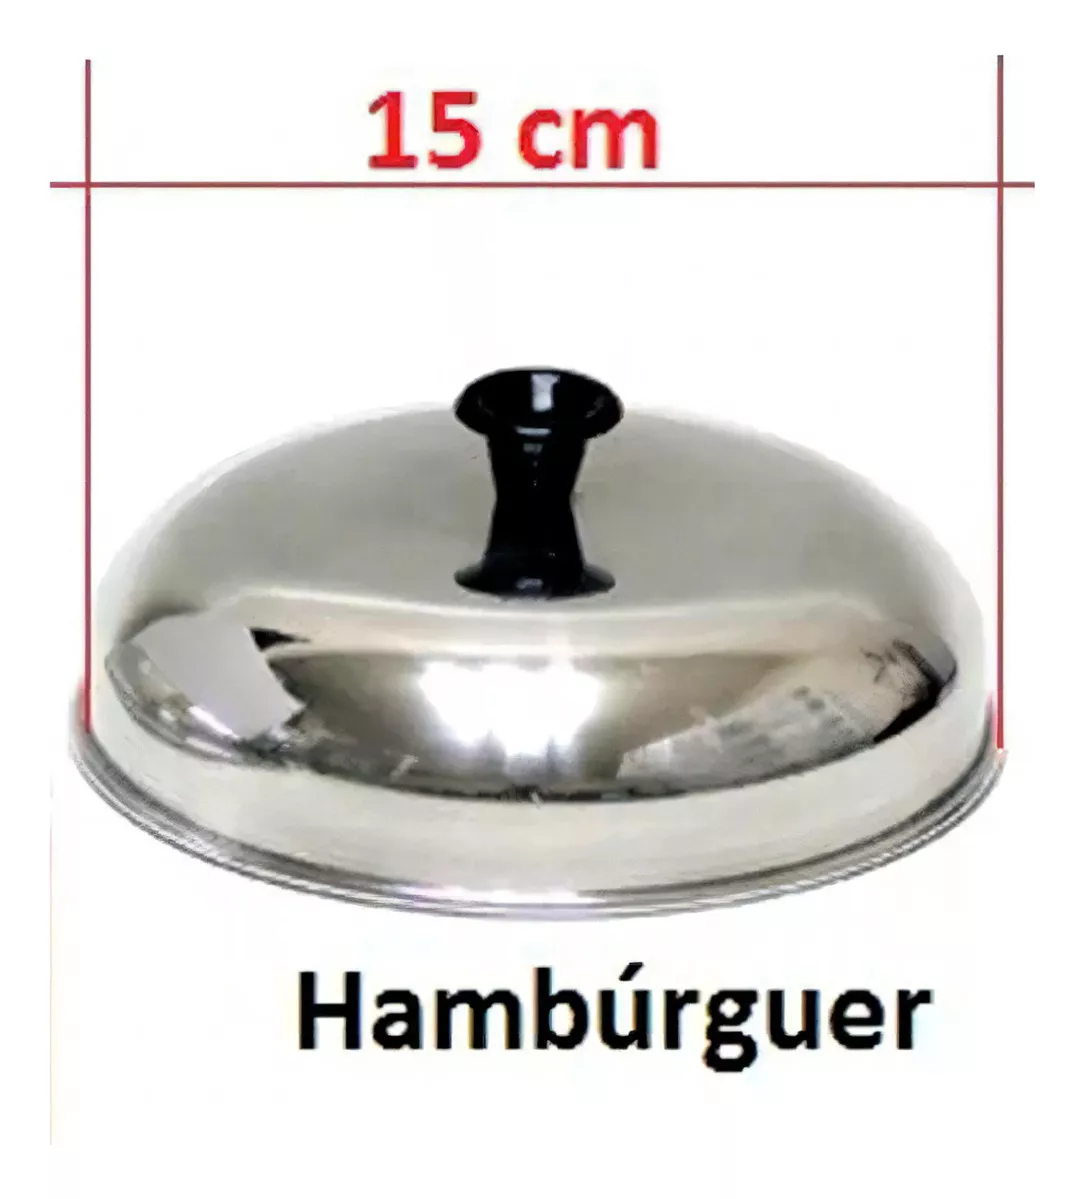 Segunda imagem para pesquisa de abafador hamburguer inox